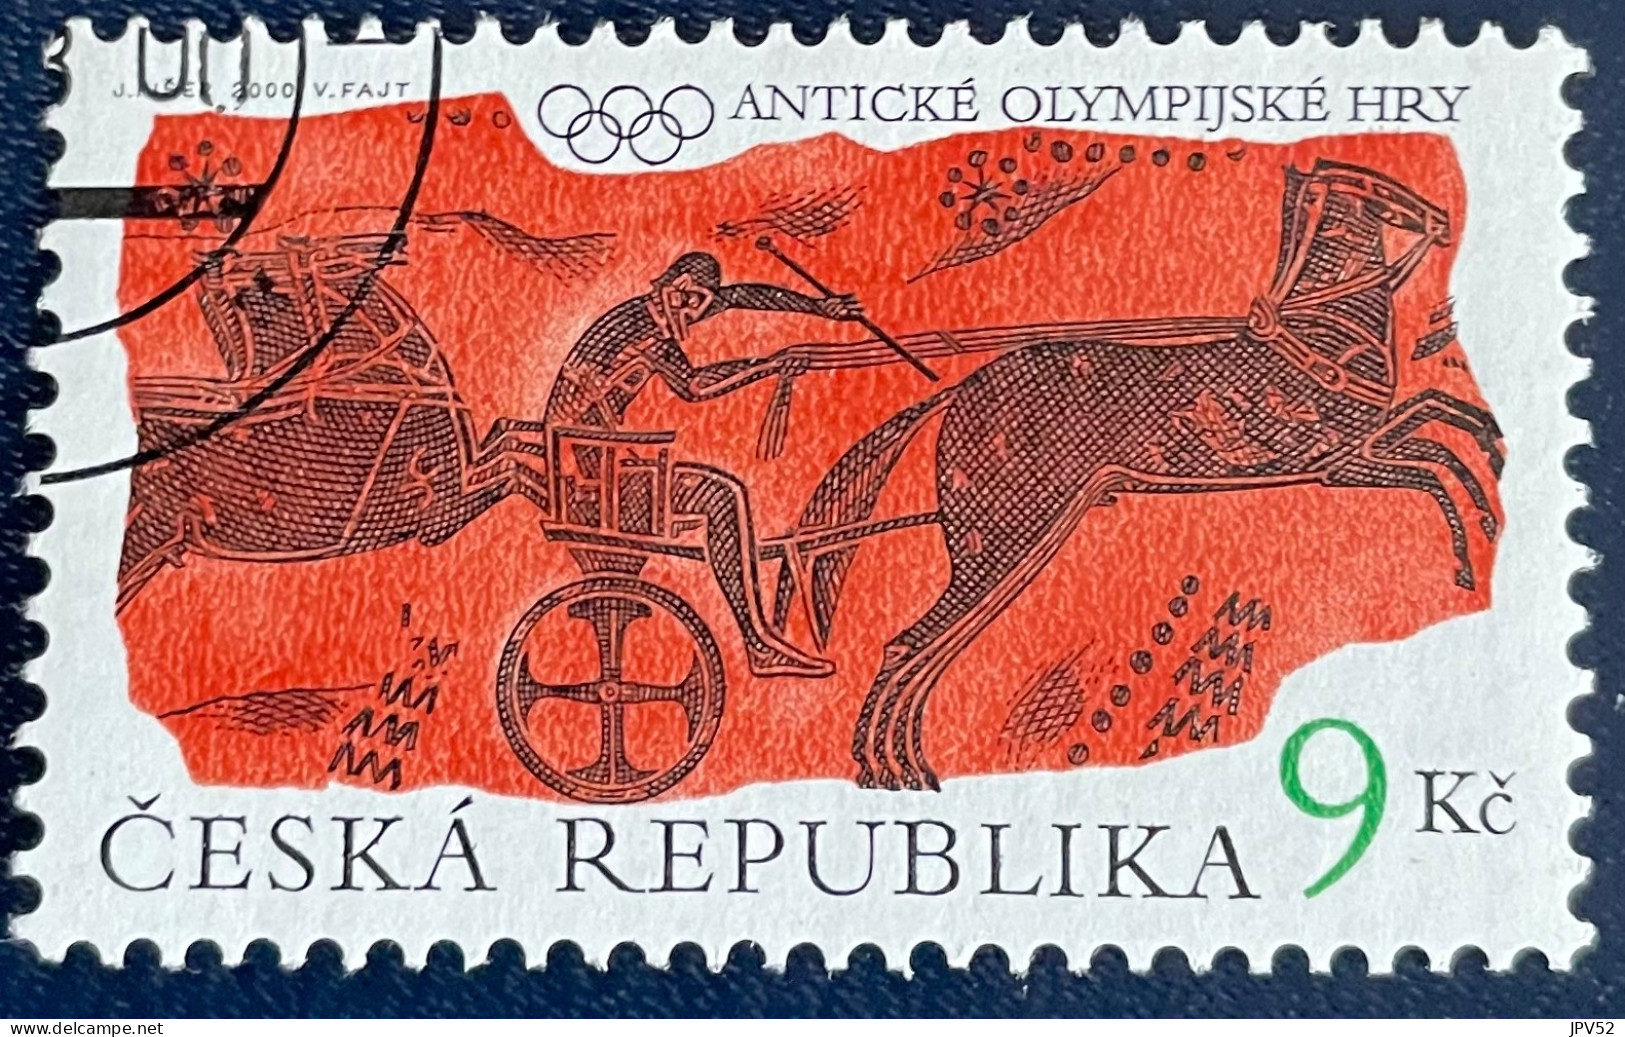 Ceska Republika - Tsjechië - C4/6 - 2000 - (°)used - Michel 268 - Oude Olympische Spelen - Used Stamps